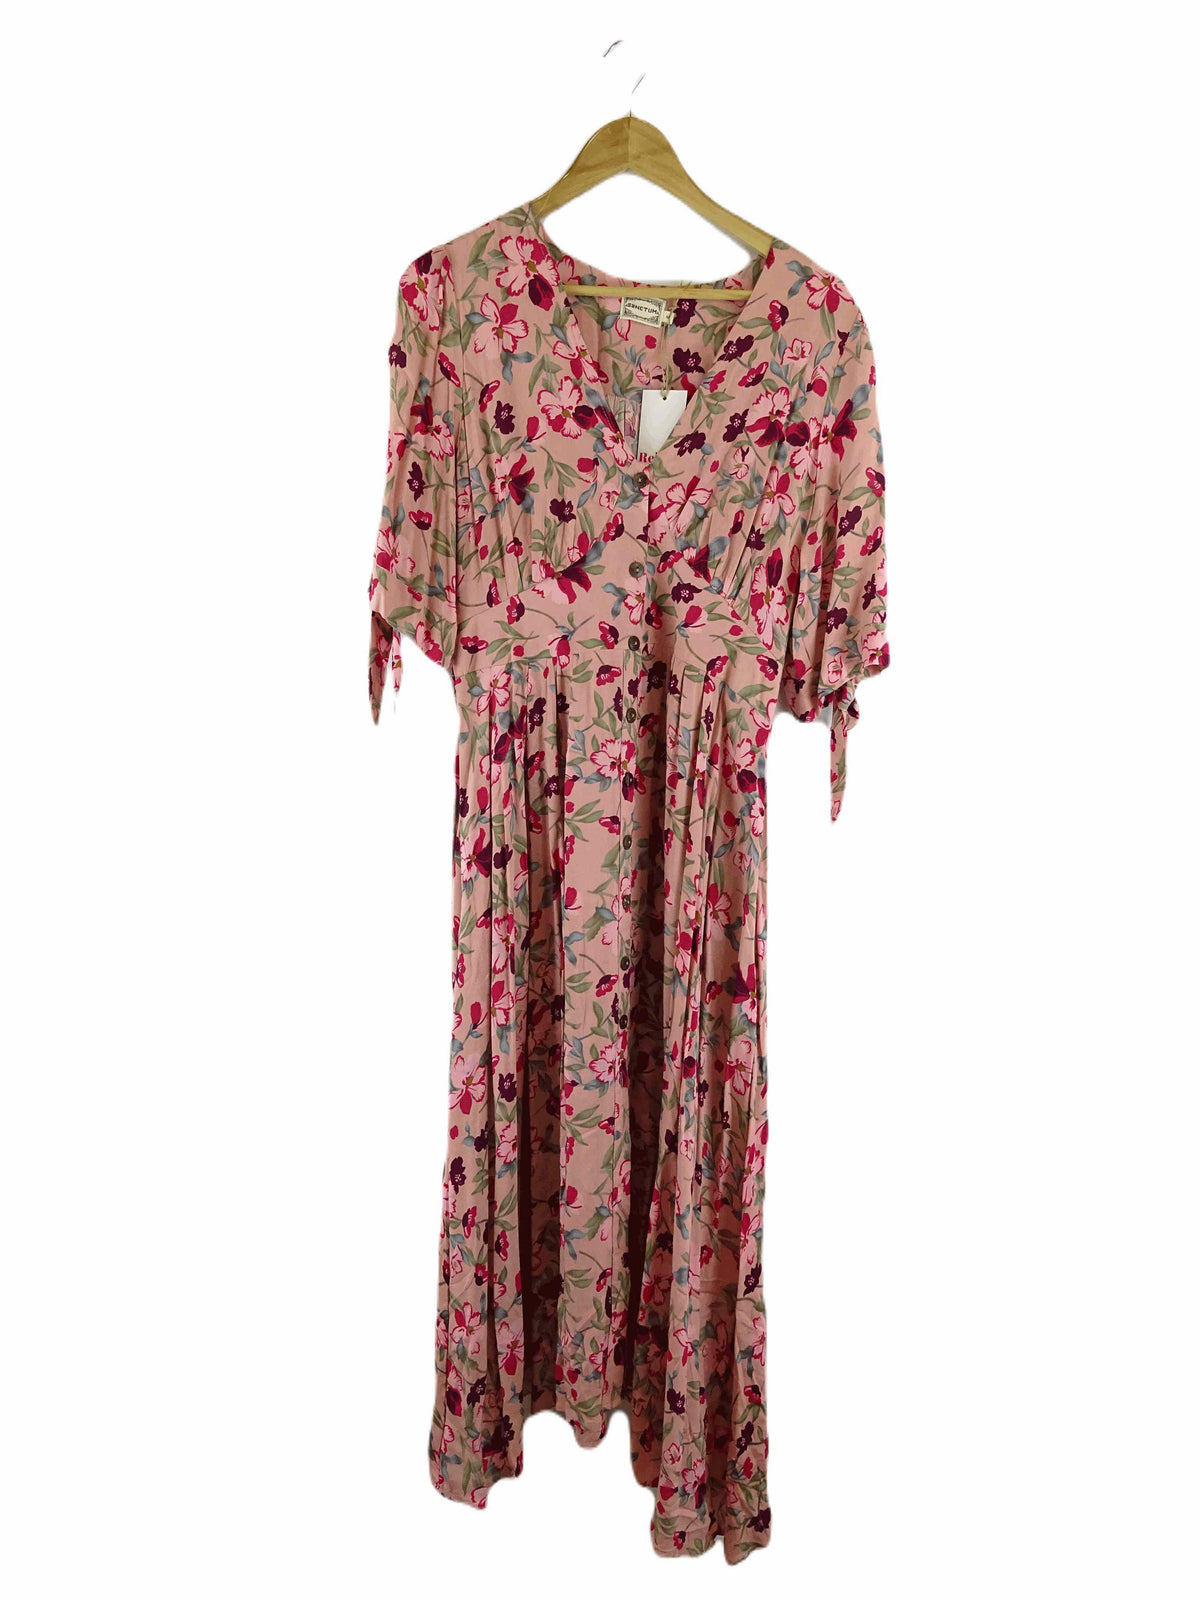 Sanctum Pink Floral Print Maxi Dress M